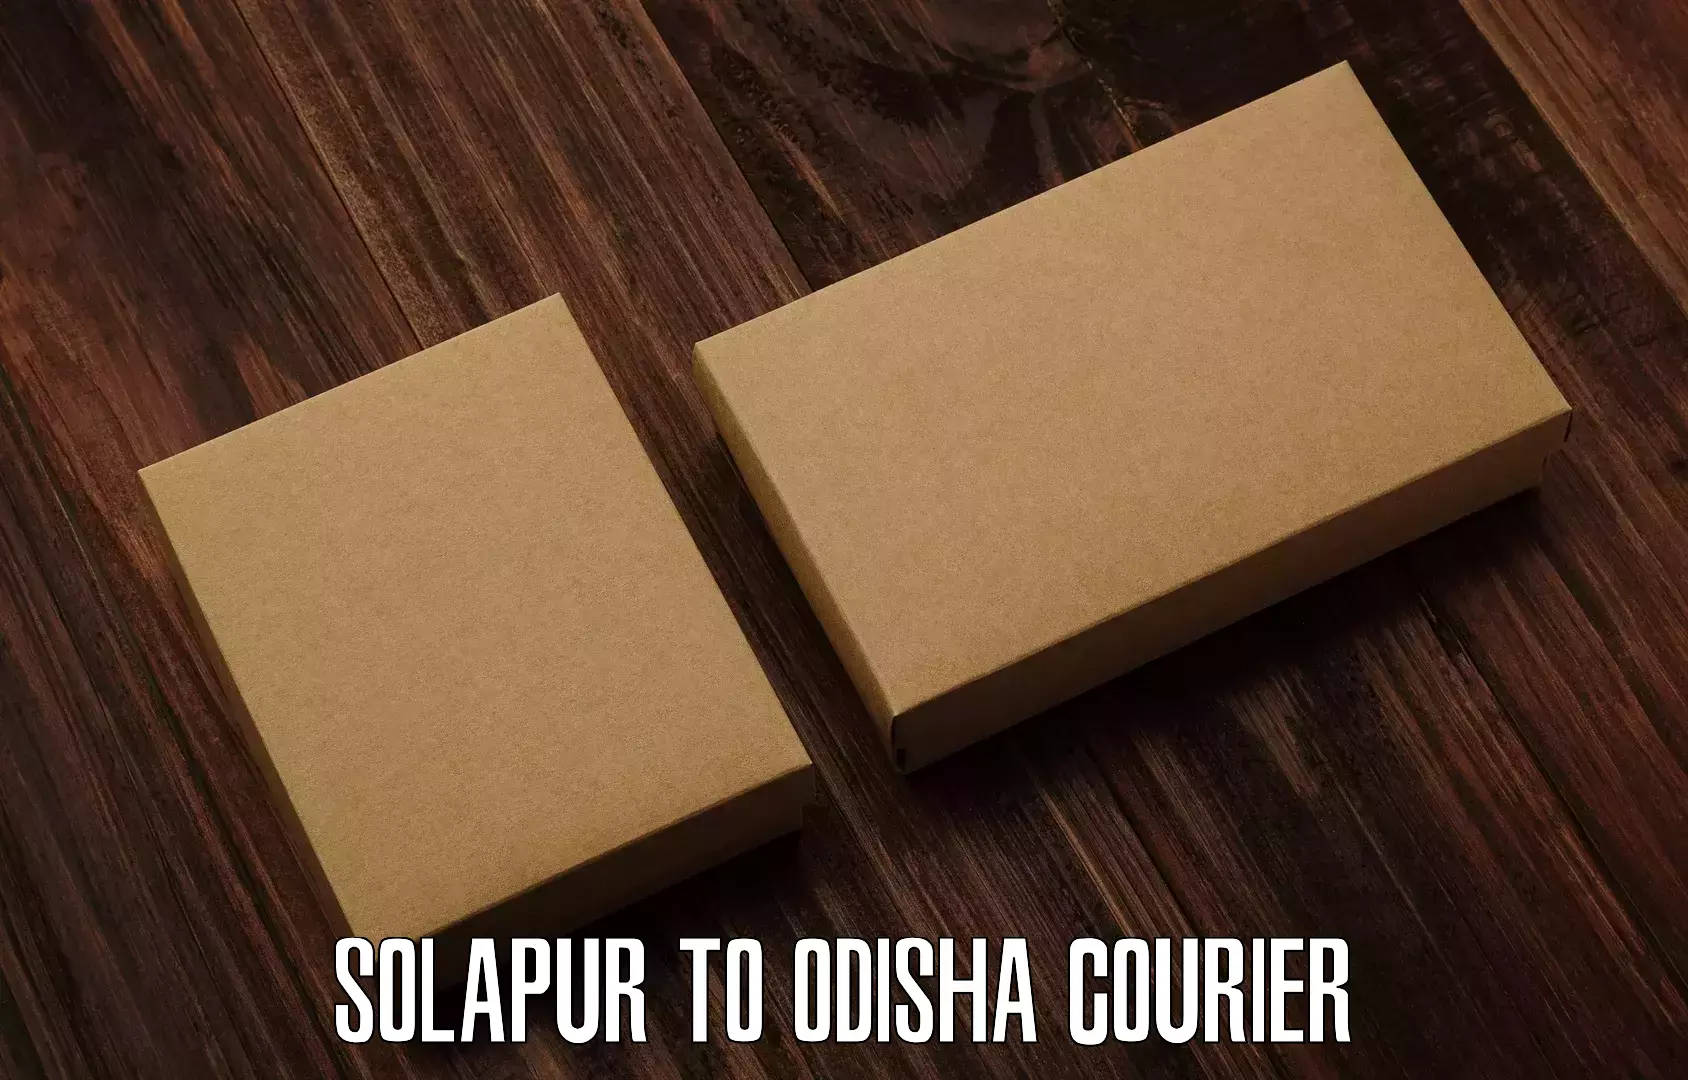 Cash on delivery service Solapur to Balikuda